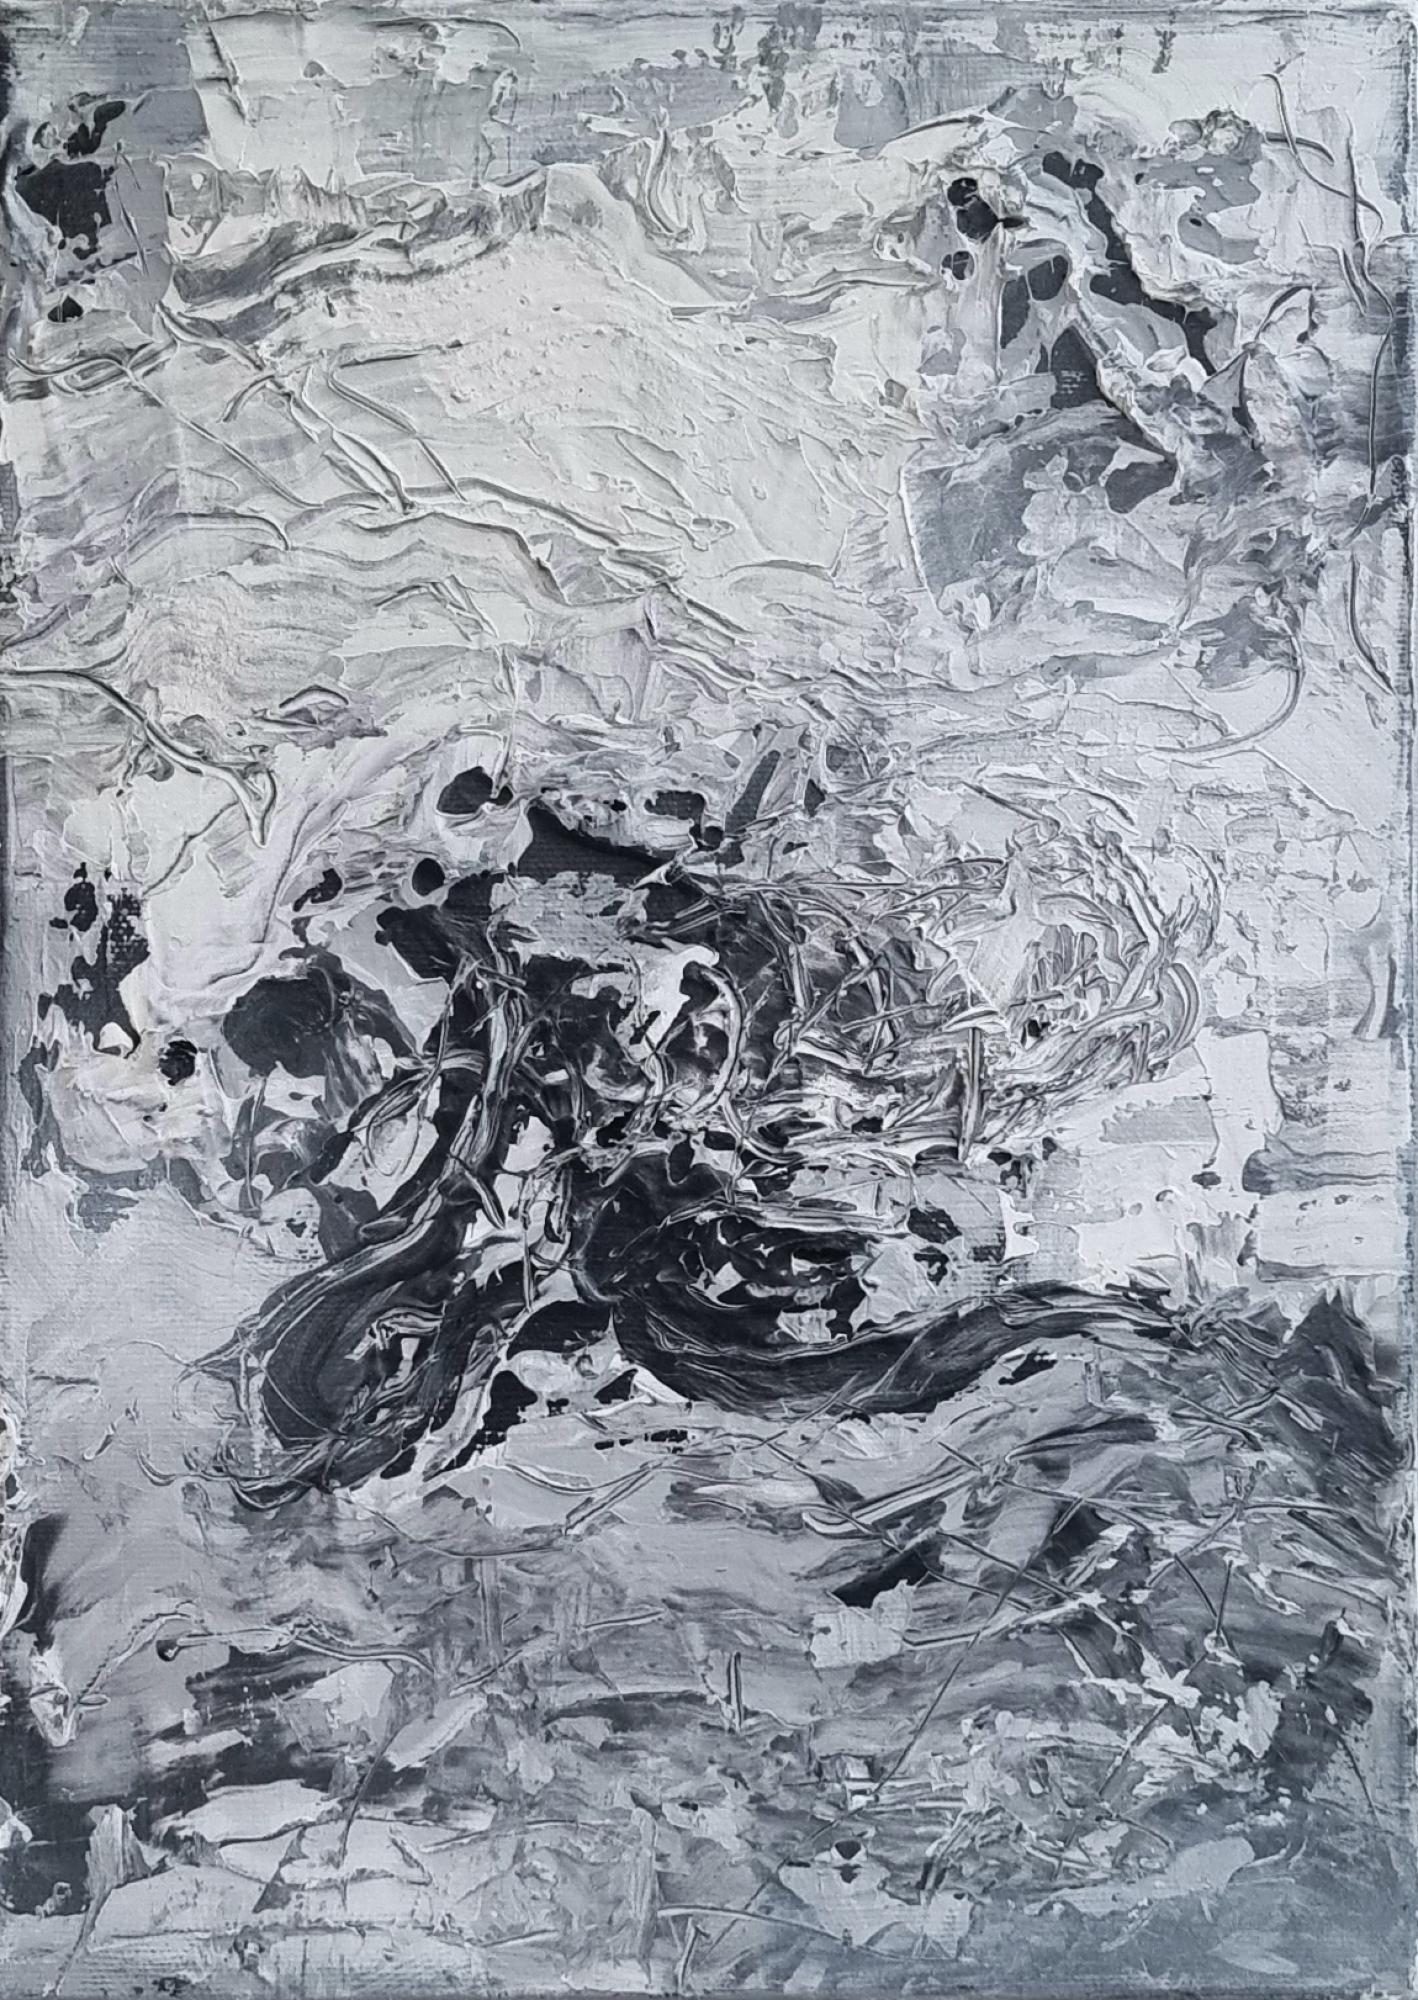 Abstract Painting Zsolt Berszán - Sans titre 06 [Remains of the Remains 06] - 21e siècle, abstrait, gris